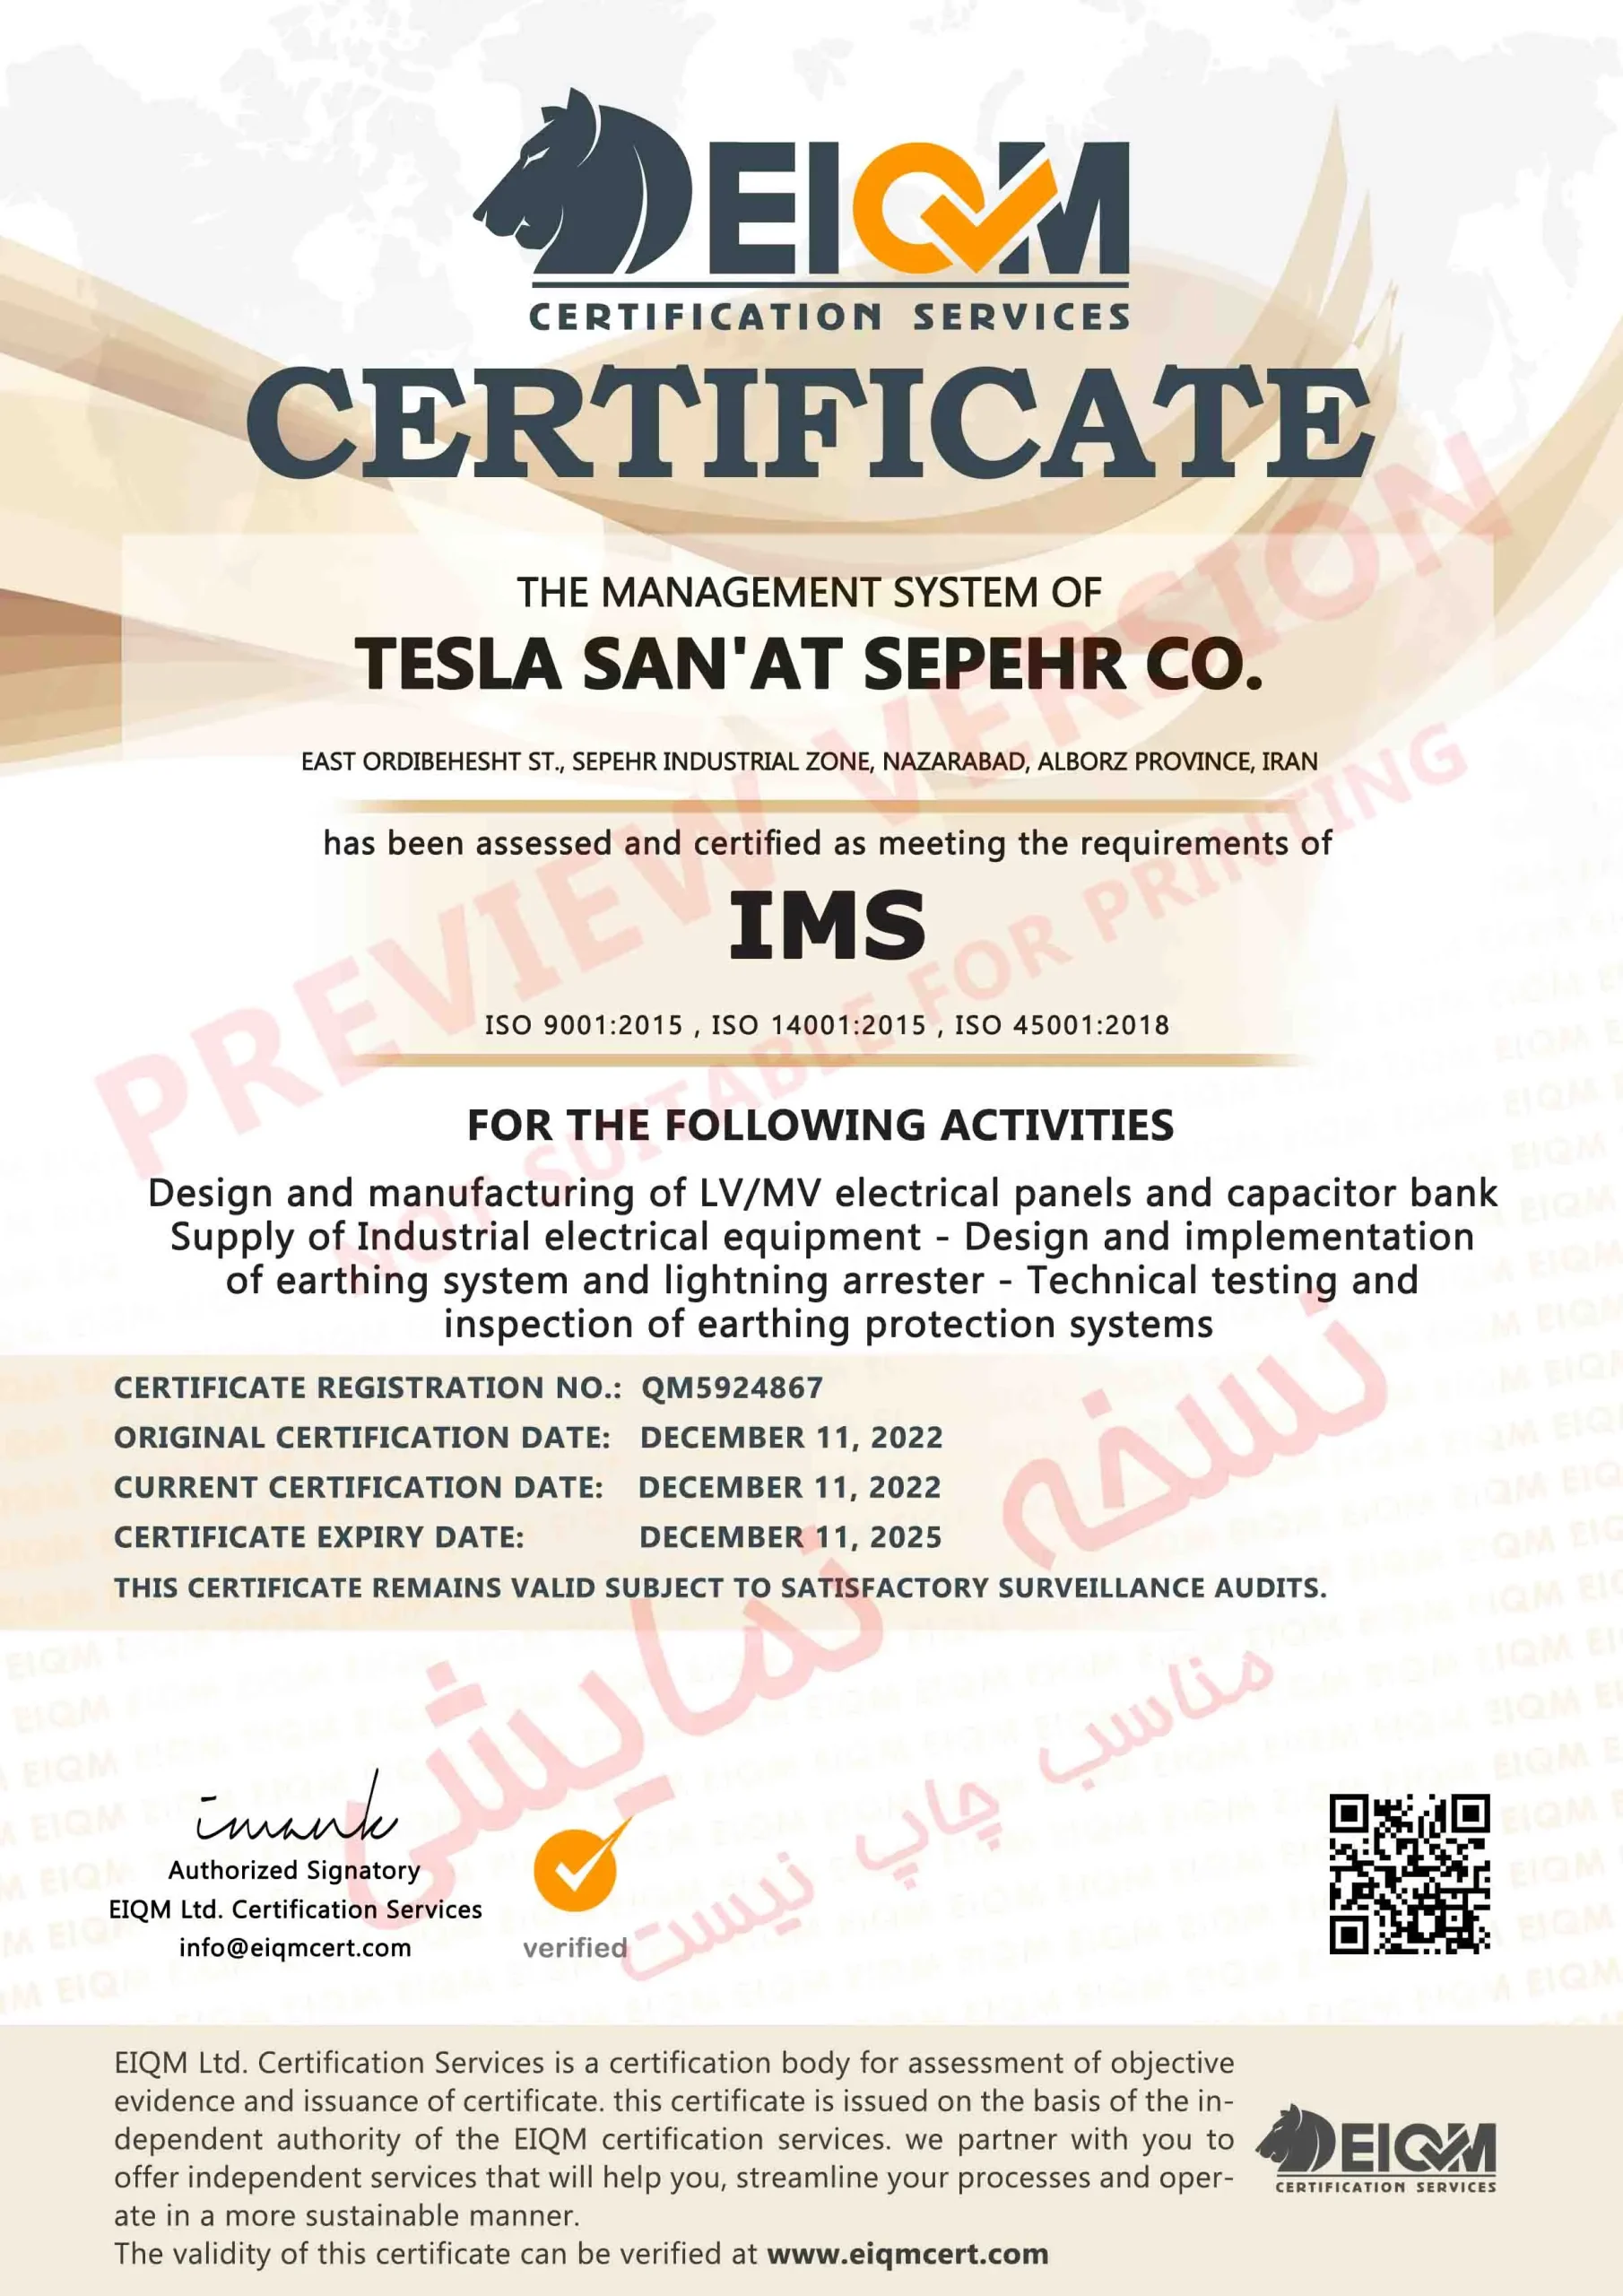 LQ-Tesla San'at Sepehr Co-IMS-QM5924867